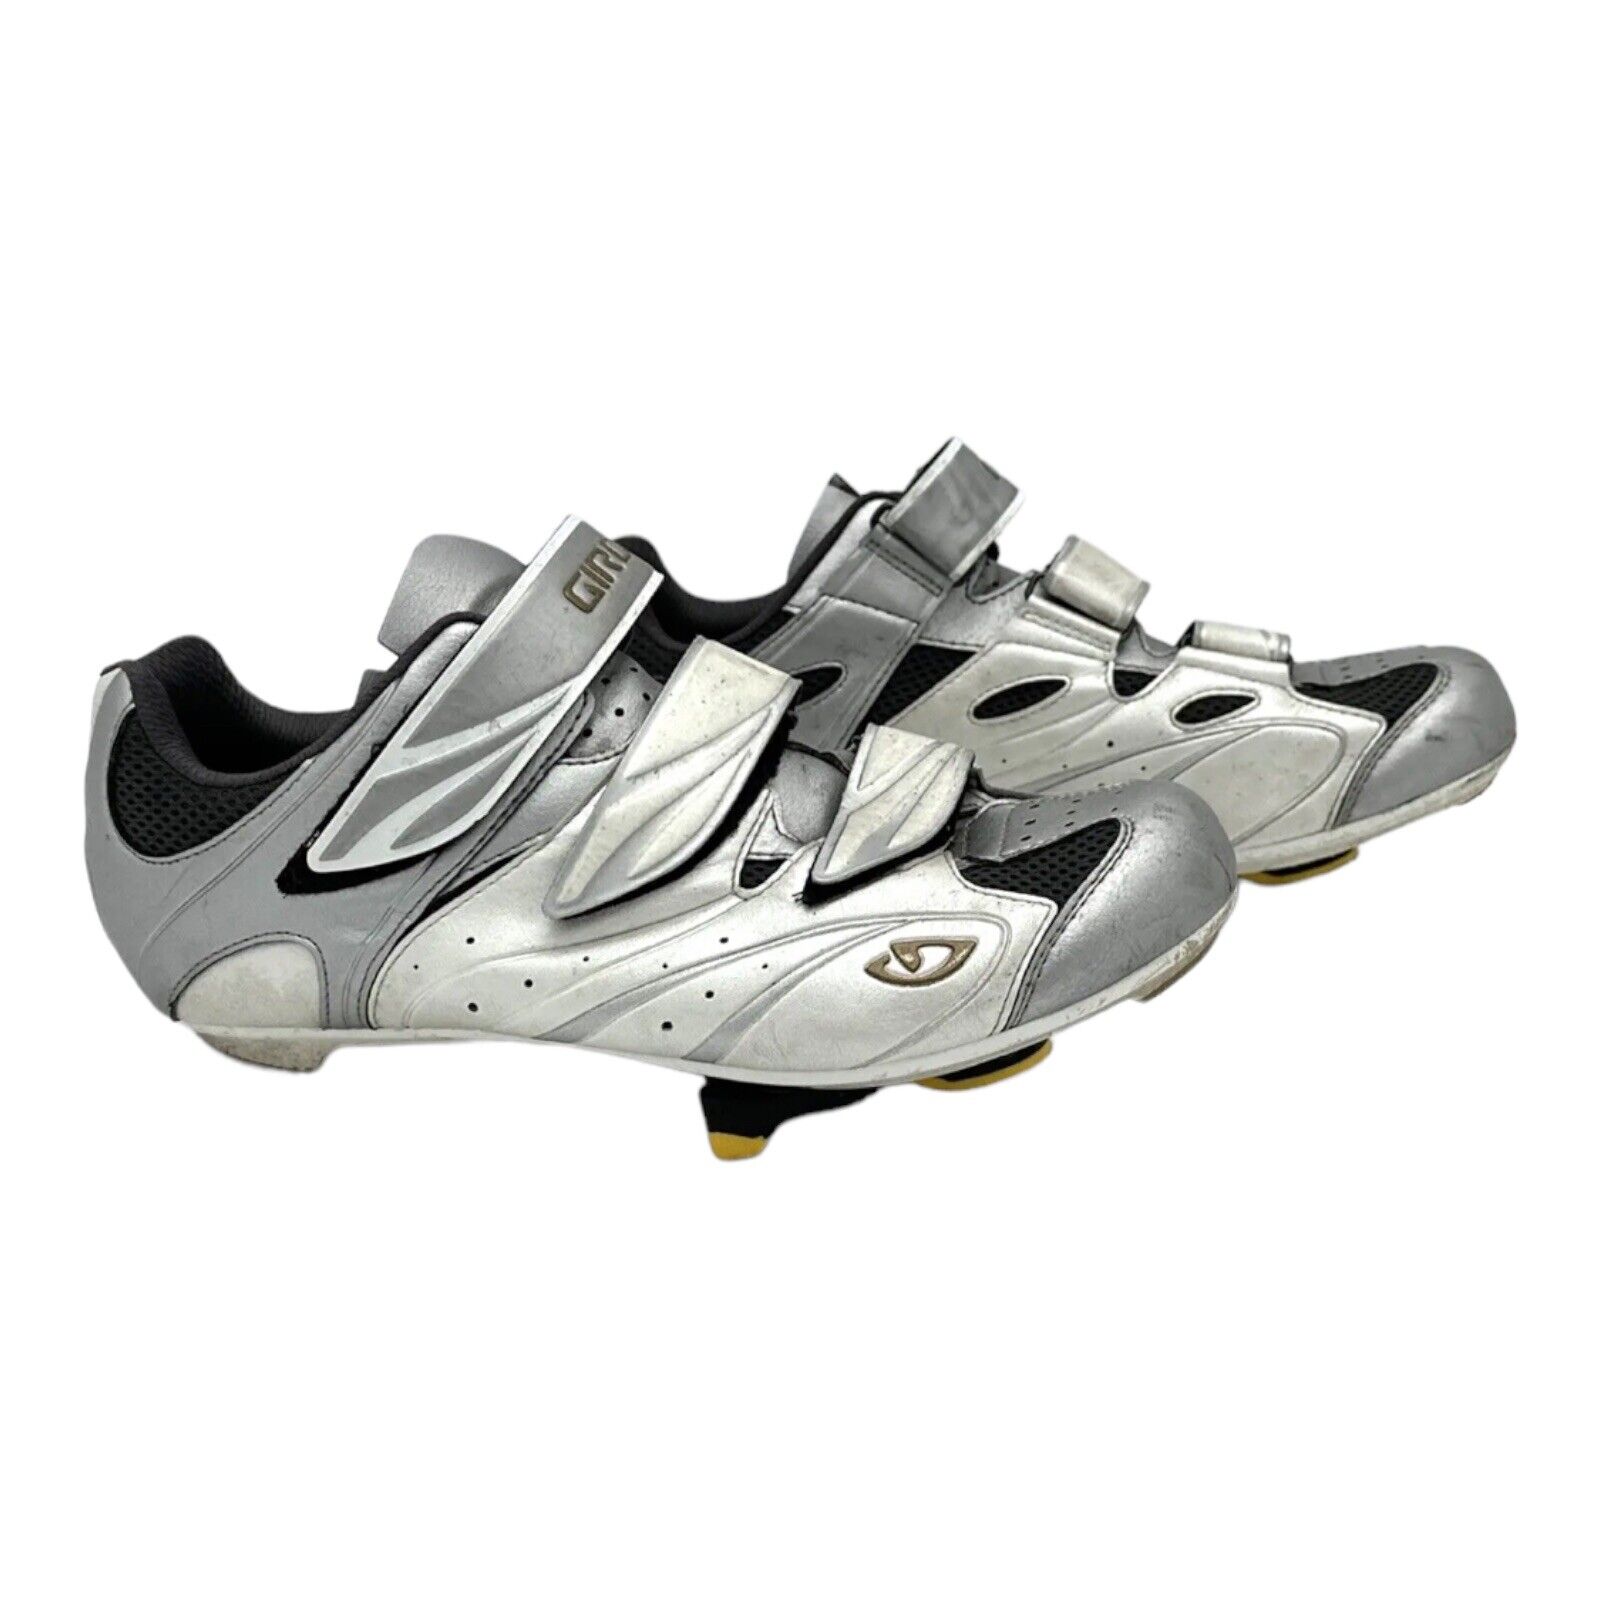 Giro Women’s Sante Cycling Road Bike Shoes Size US 8.5 EU 40.5 White Silver